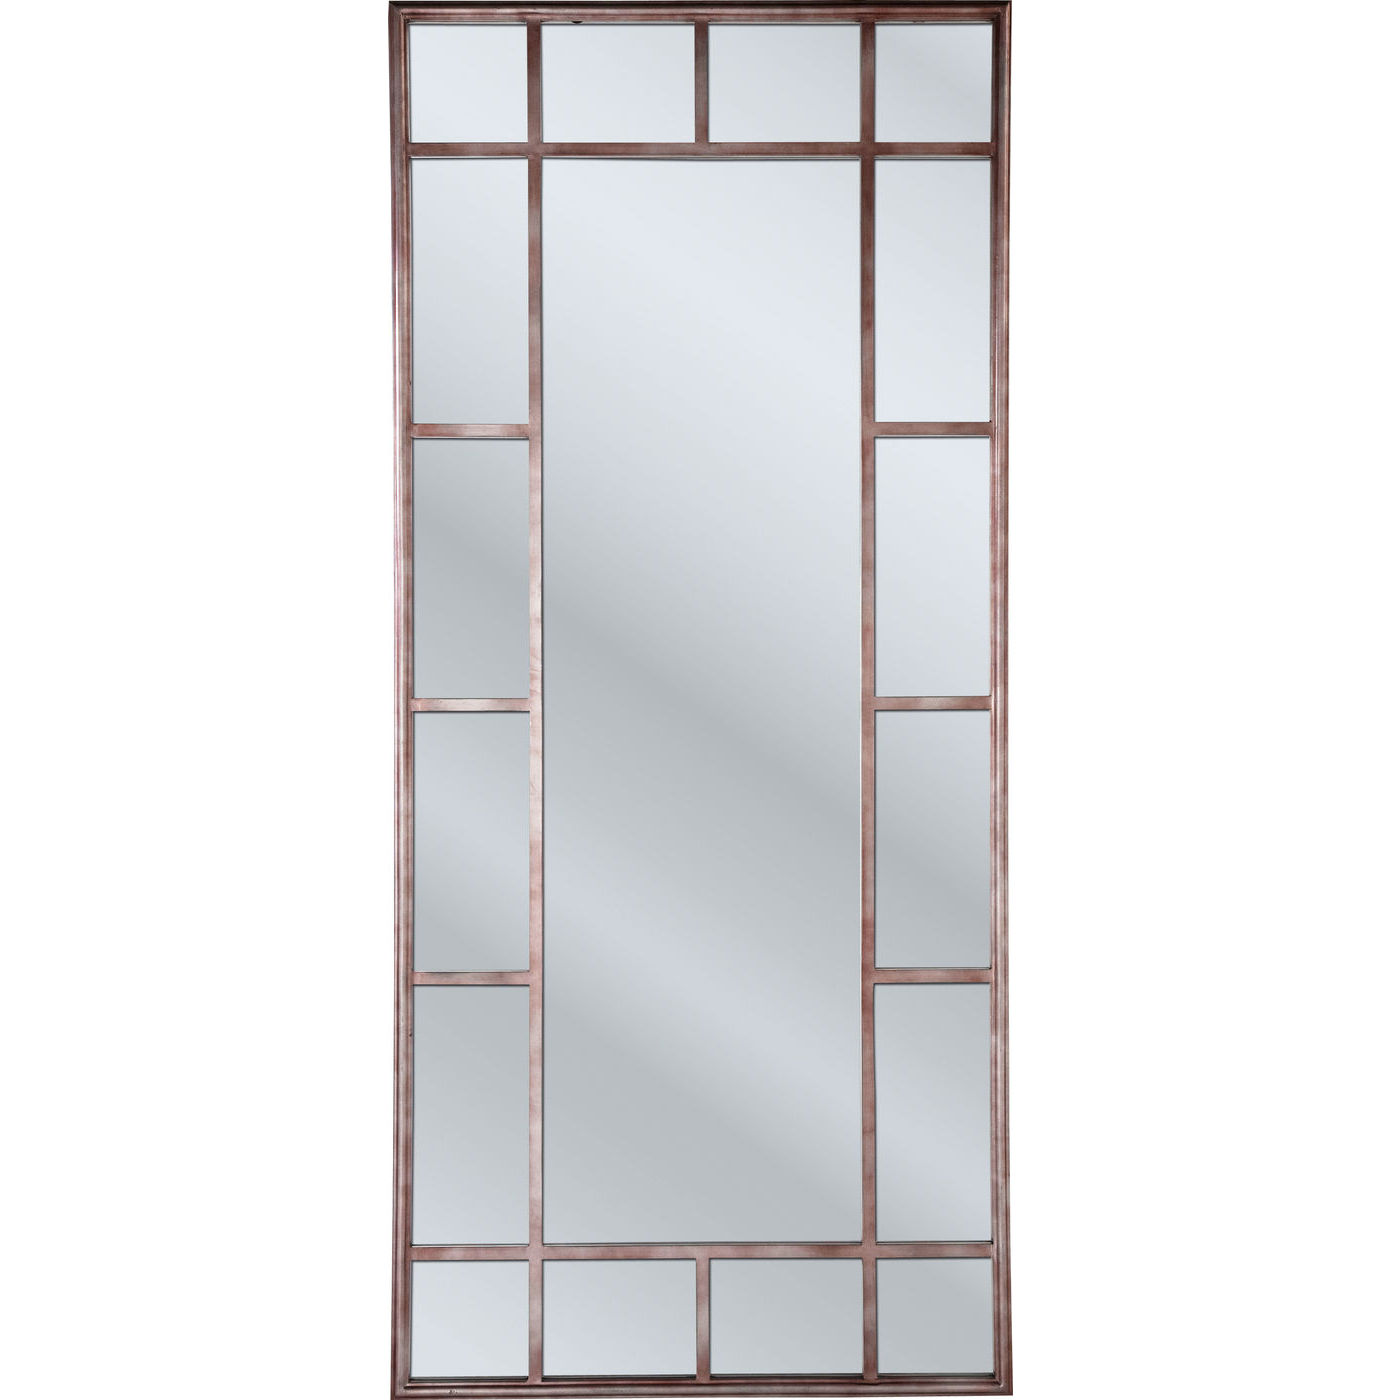 4: KARE DESIGN Spejl, Window Iron 200x90cm, pulverlakeret stål, rustent antikt look